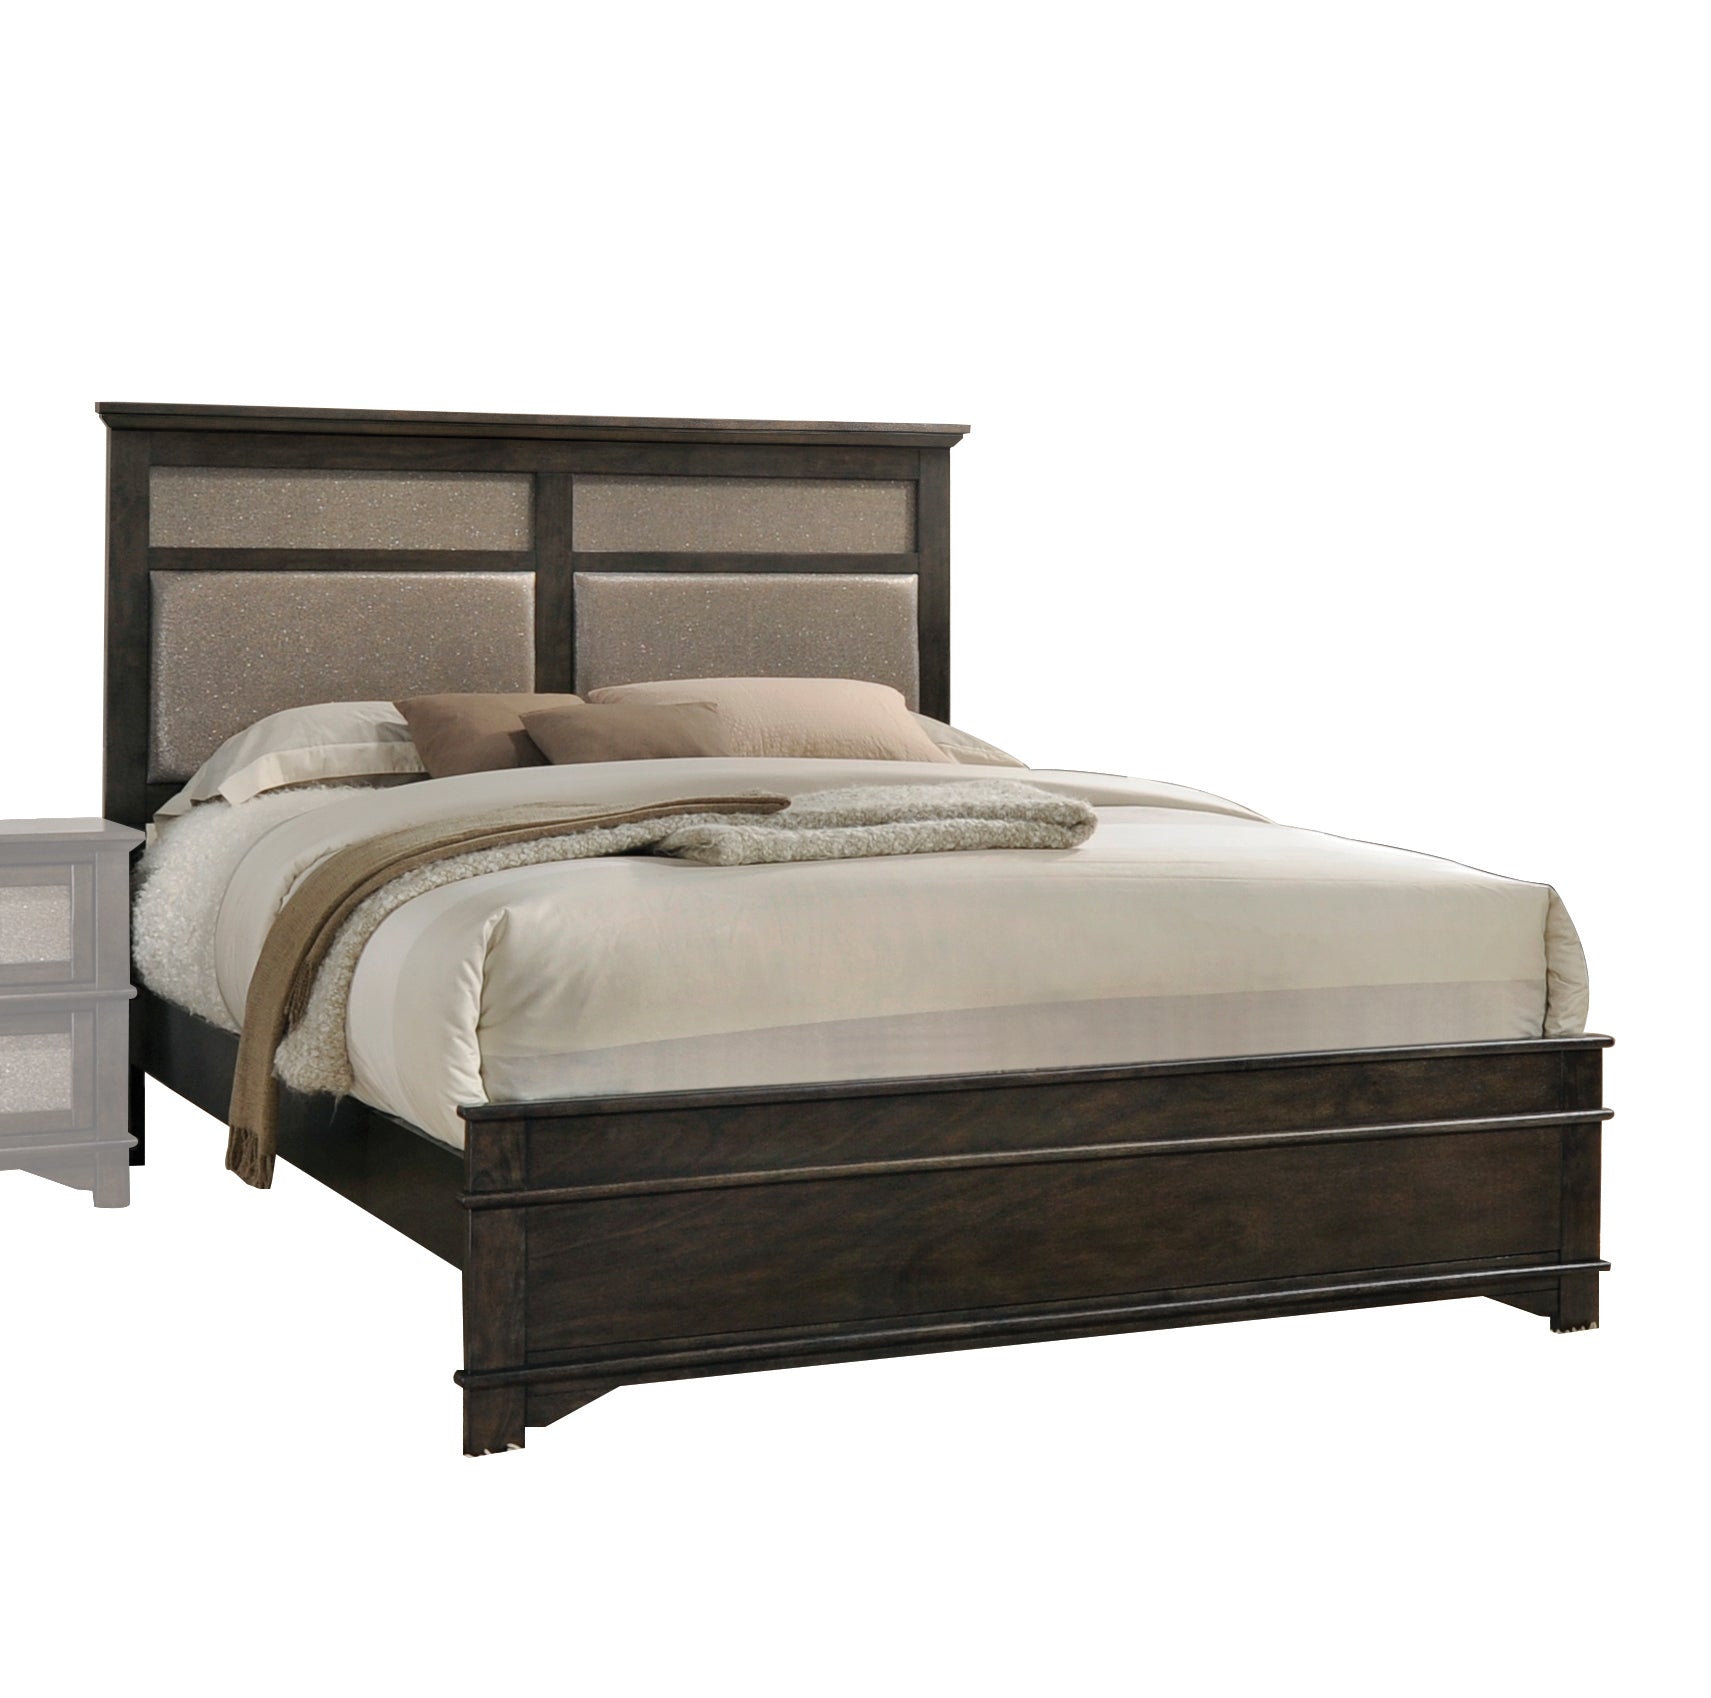 65" X 85" X 52" Copper PU Dark Walnut Wood Upholstery Queen Bed Default Title